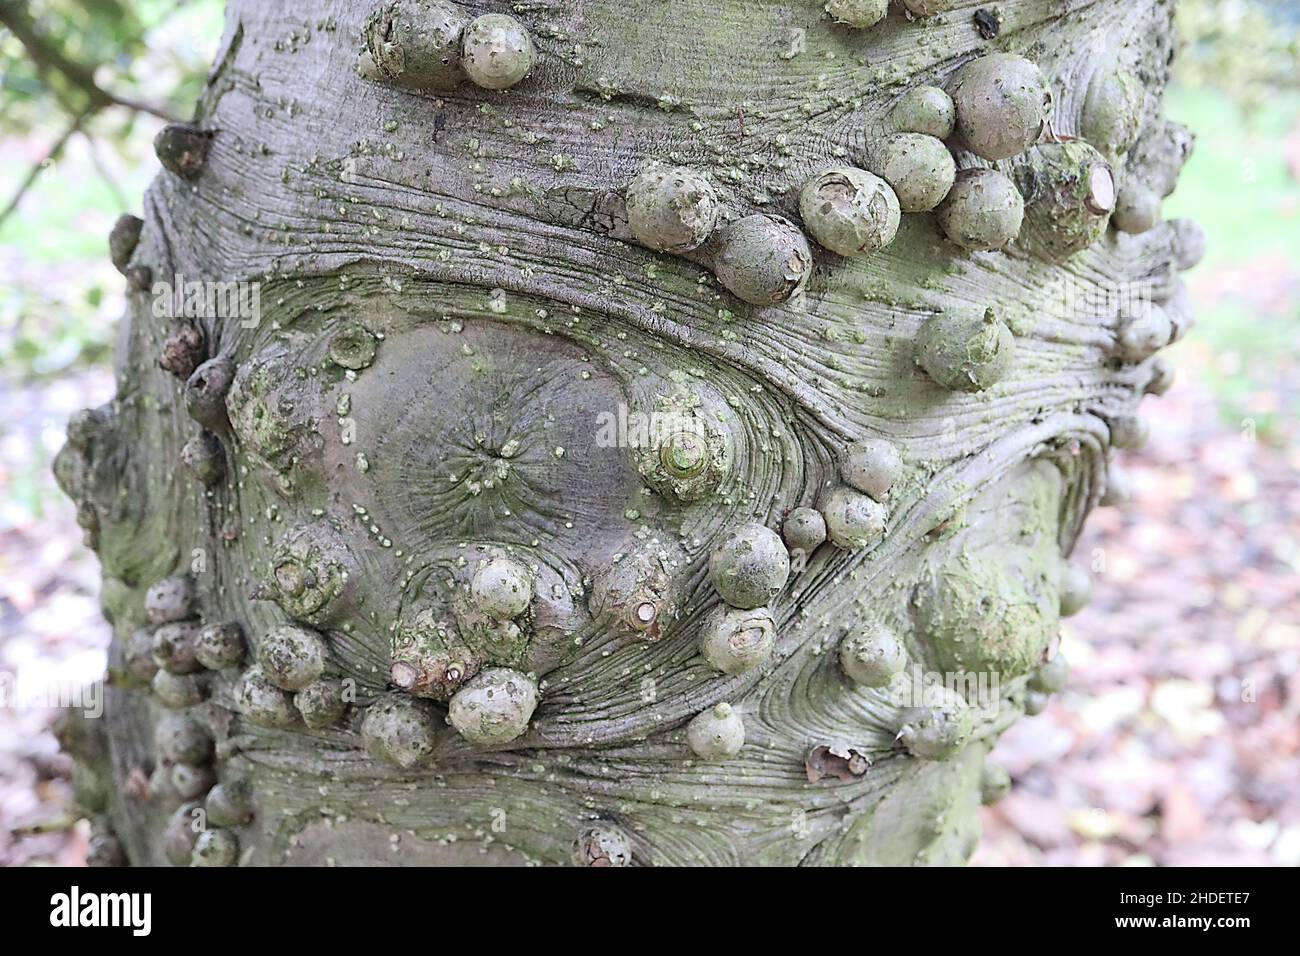 Ilex aquifolium “Reina de Oro” Reina de Oro acebo – corteza gris buff con tortas circulares y burbujas, enero, Inglaterra, Reino Unido Foto de stock